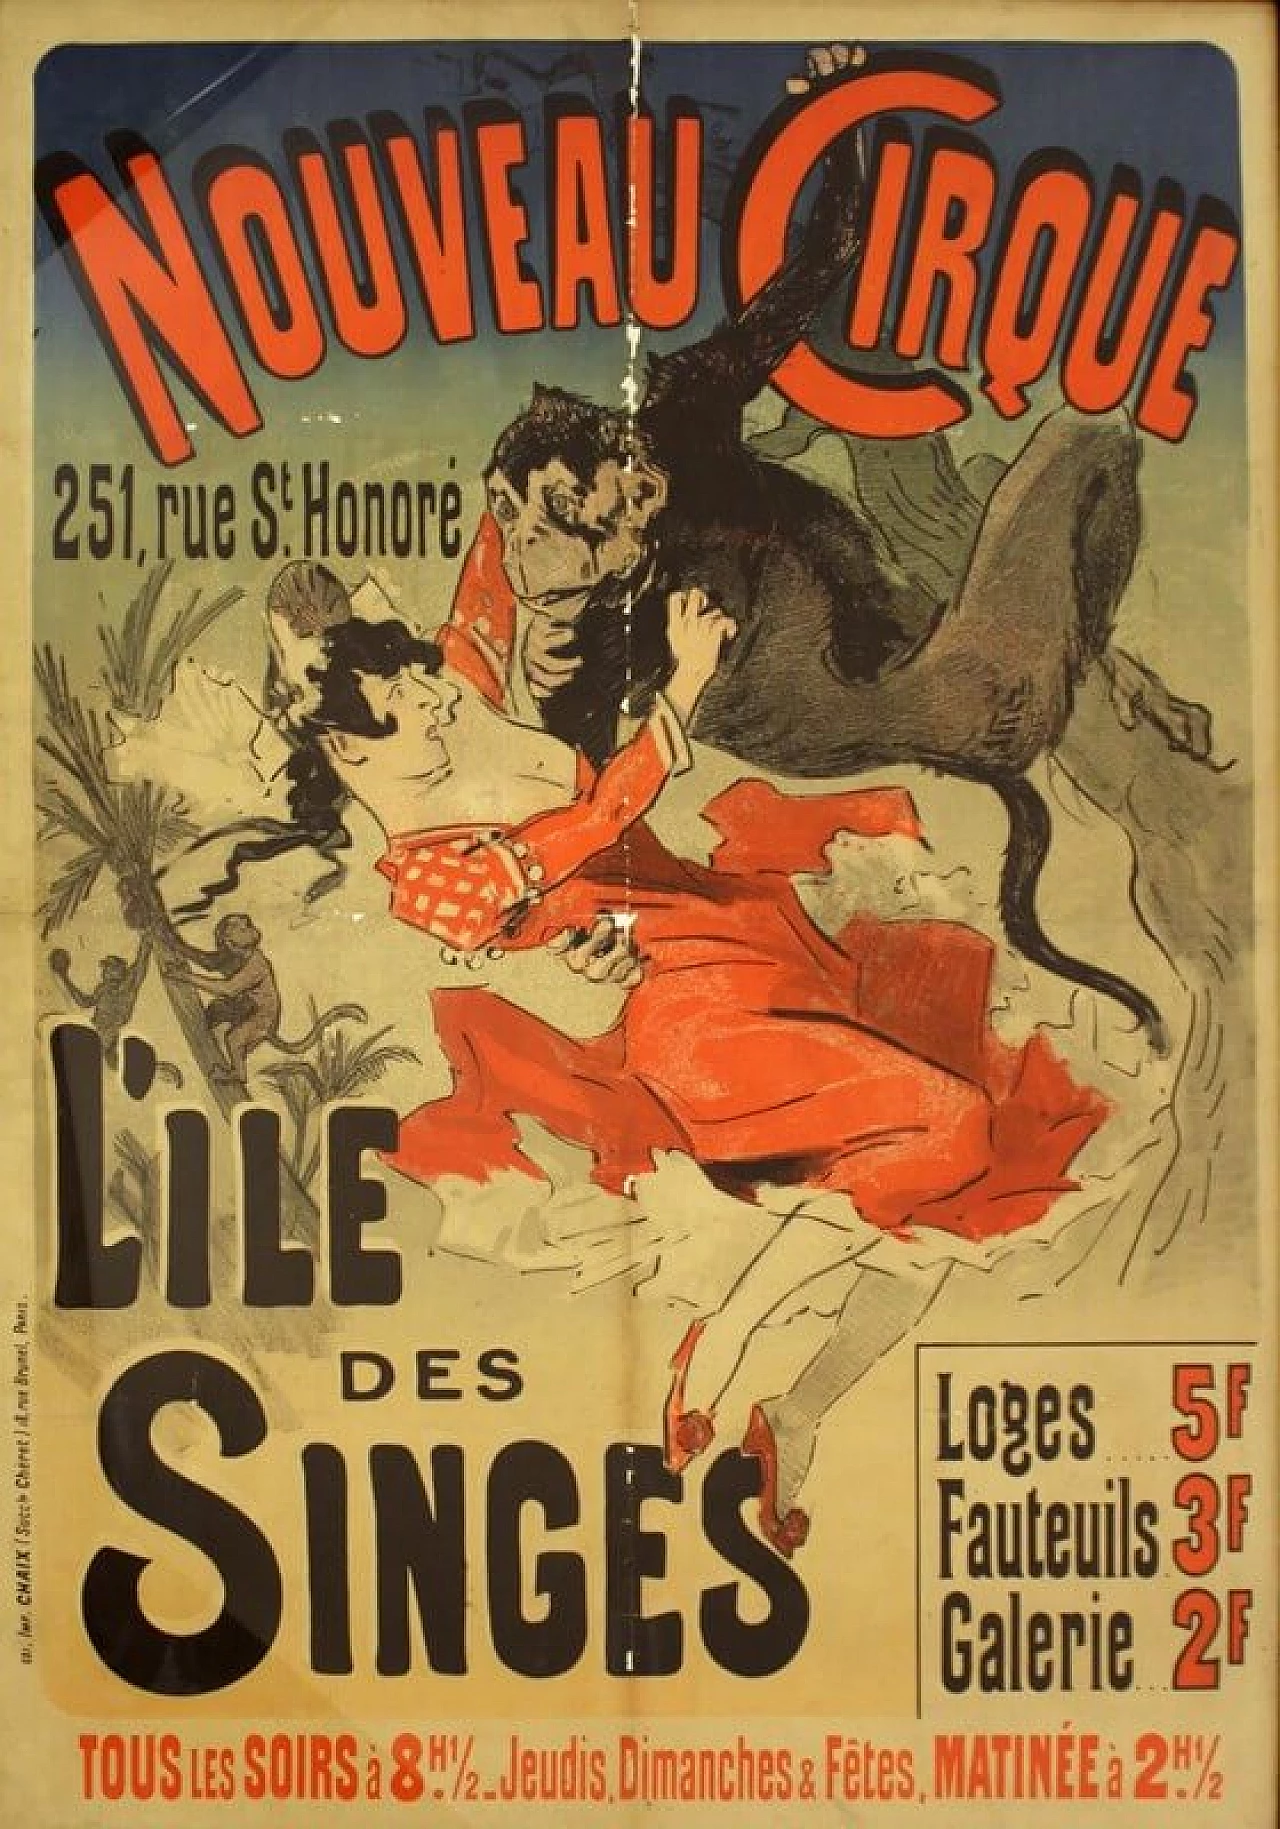 Litografia originale Nuoveau Cirque di Jules Chéret 1094029